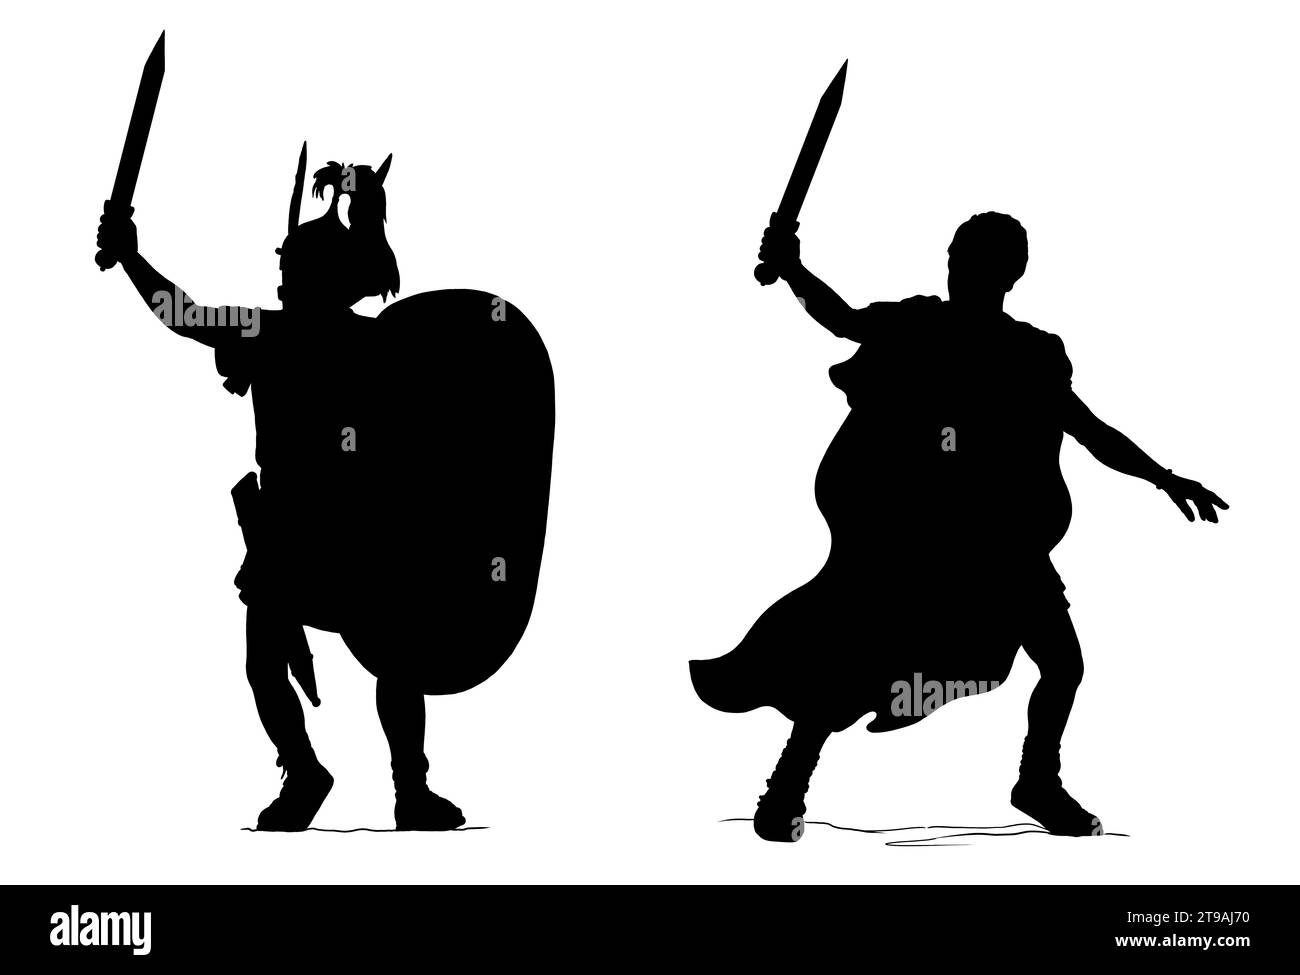 Roman general and imperator Gaius Julius Caesar with roman centurion. Warriors silhouette drawing. Stock Photo